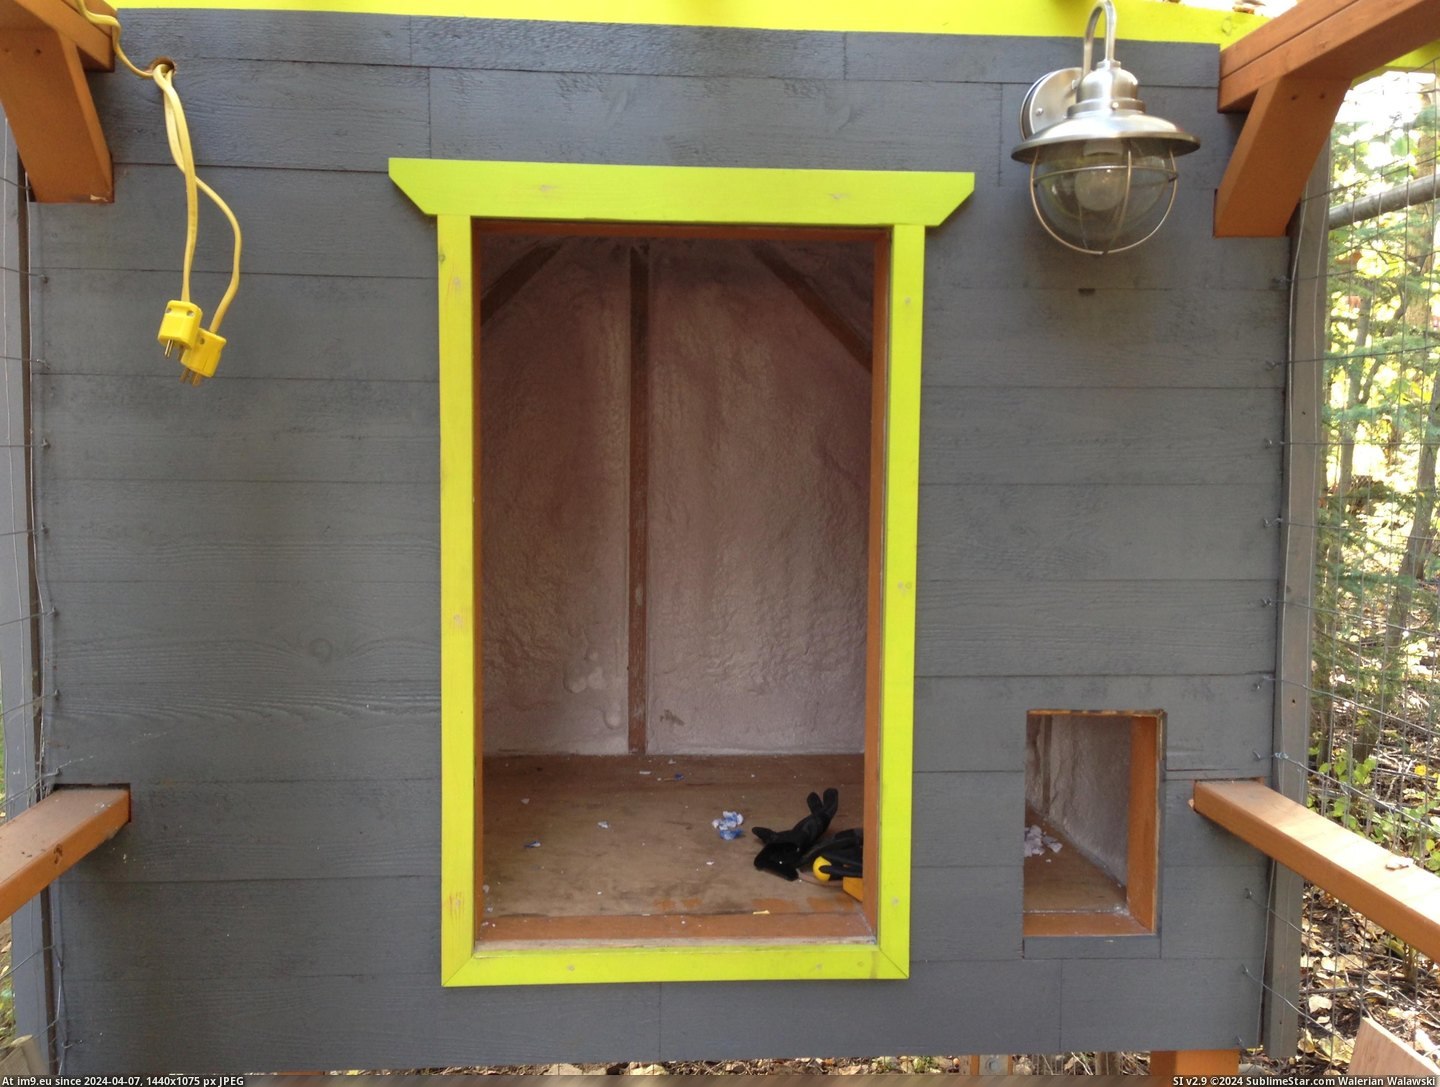 #Share #Thought #Chicken #Coop #Built #Alaska [Pics] I built a chicken coop at my home in Alaska and I thought I'd share 12 Pic. (Obraz z album My r/PICS favs))